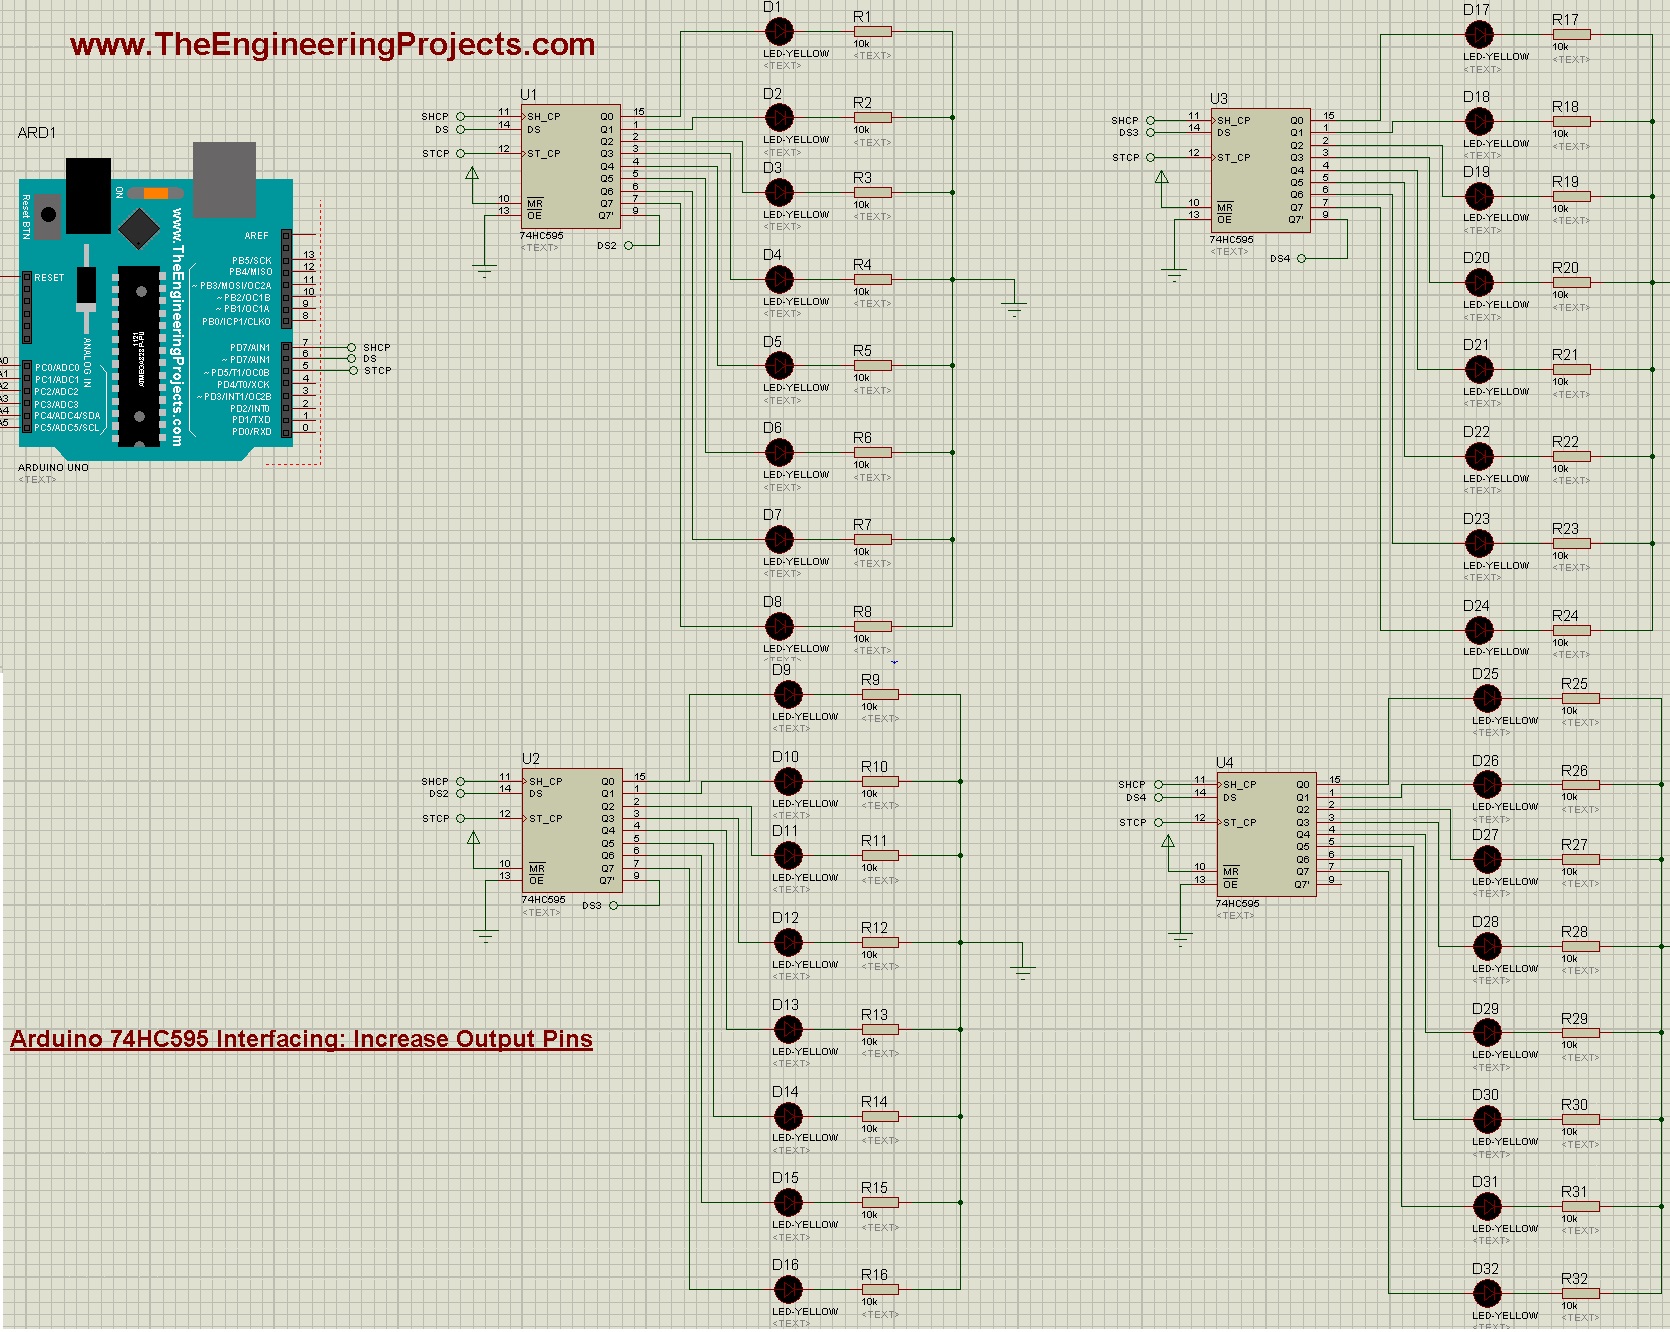 Arduino 74HC595,Arduino 74HC595 interfacing, increase arduino output pins, arduino output increase, 74hc595 arduino